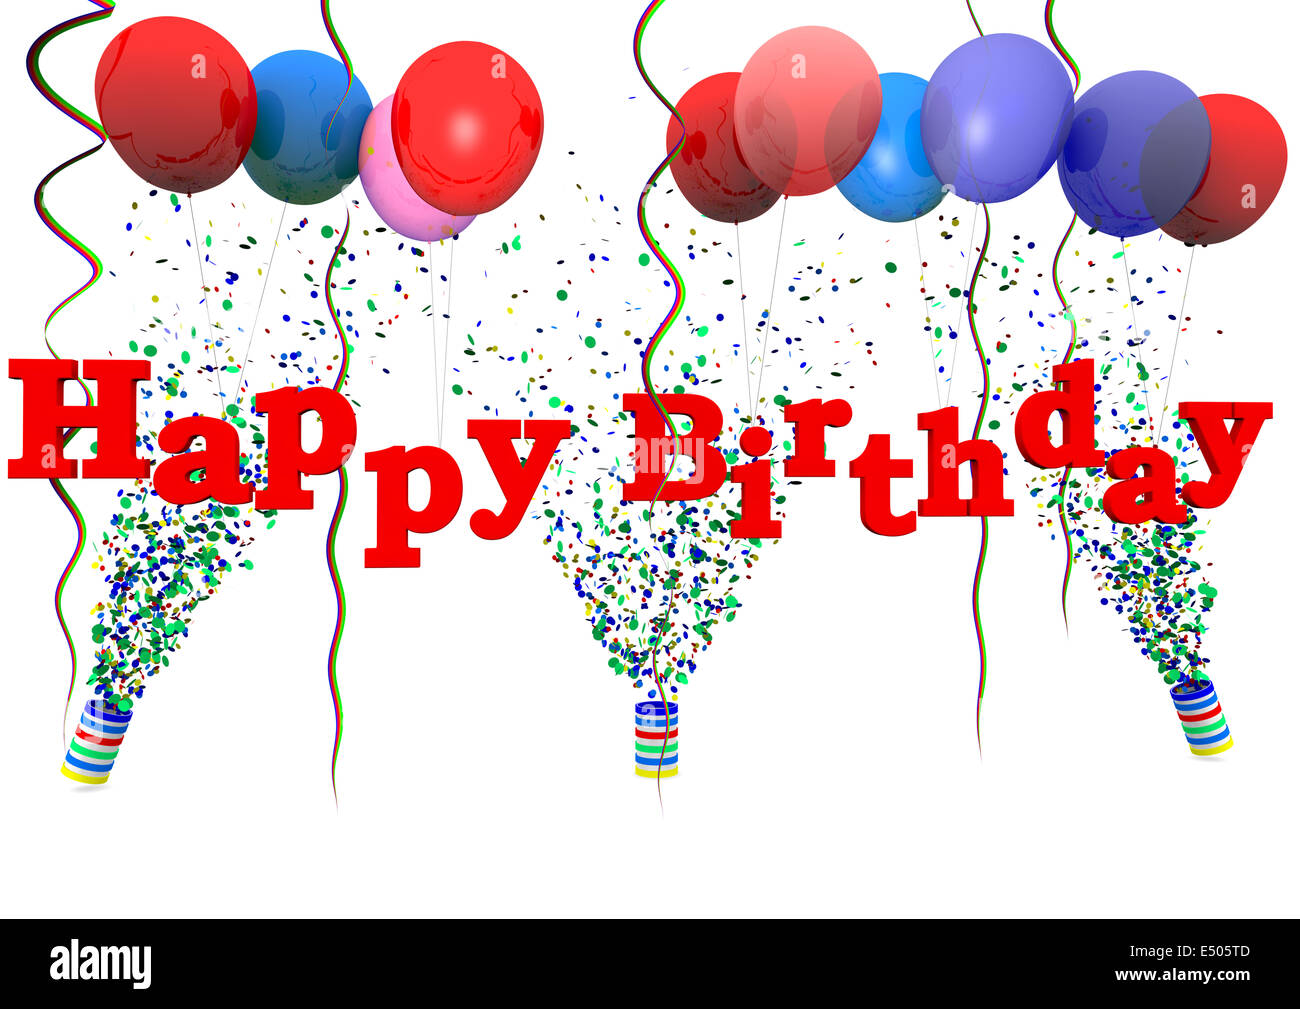 Happy Birthday Schriftzug in rot mit ballons Stockfotografie - Alamy